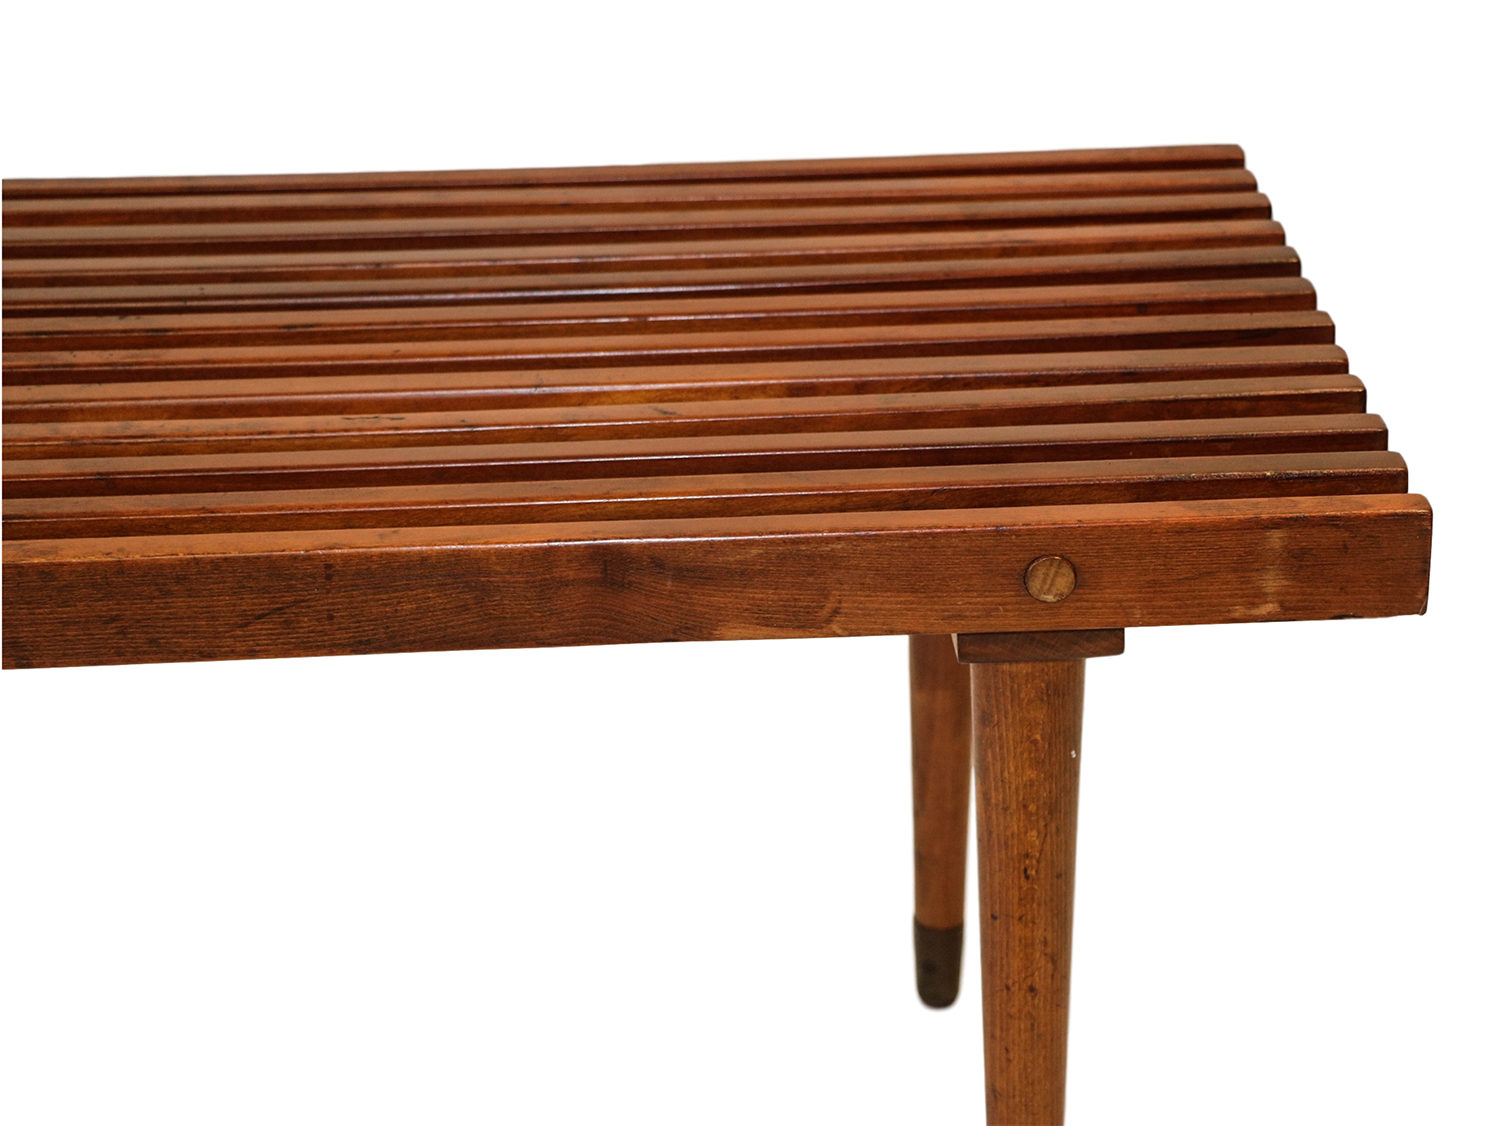 wood coffee table bench photo - 10